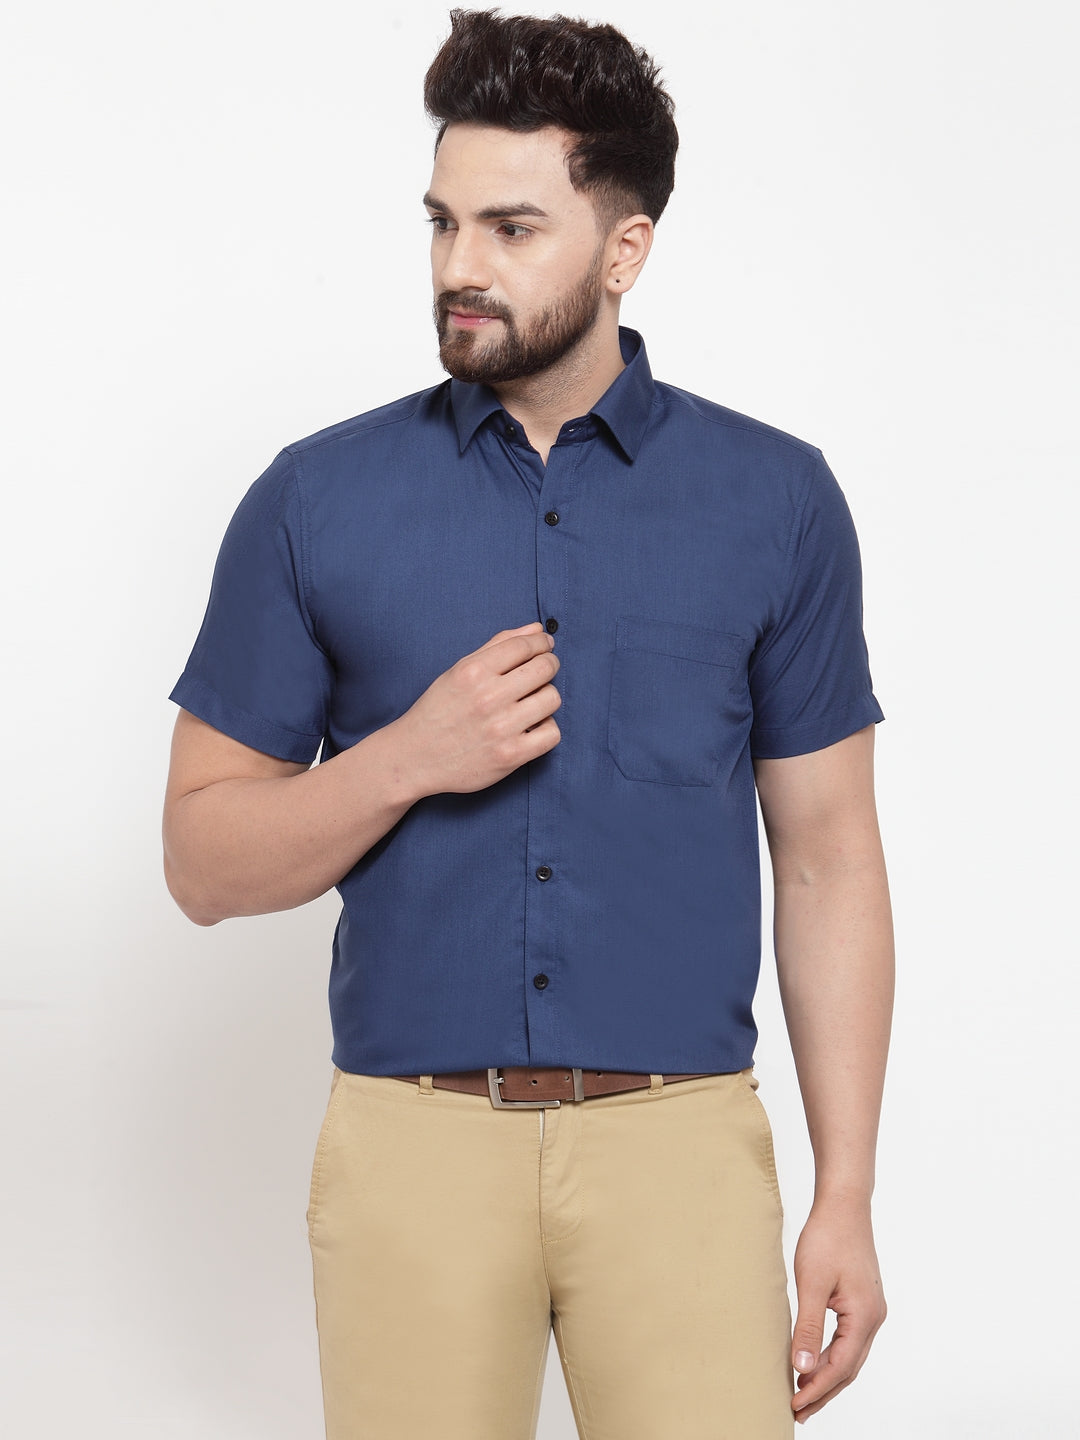 Men's Blue Cotton Half Sleeves Solid Formal Shirts ( SF 754Peacock ) - Jainish